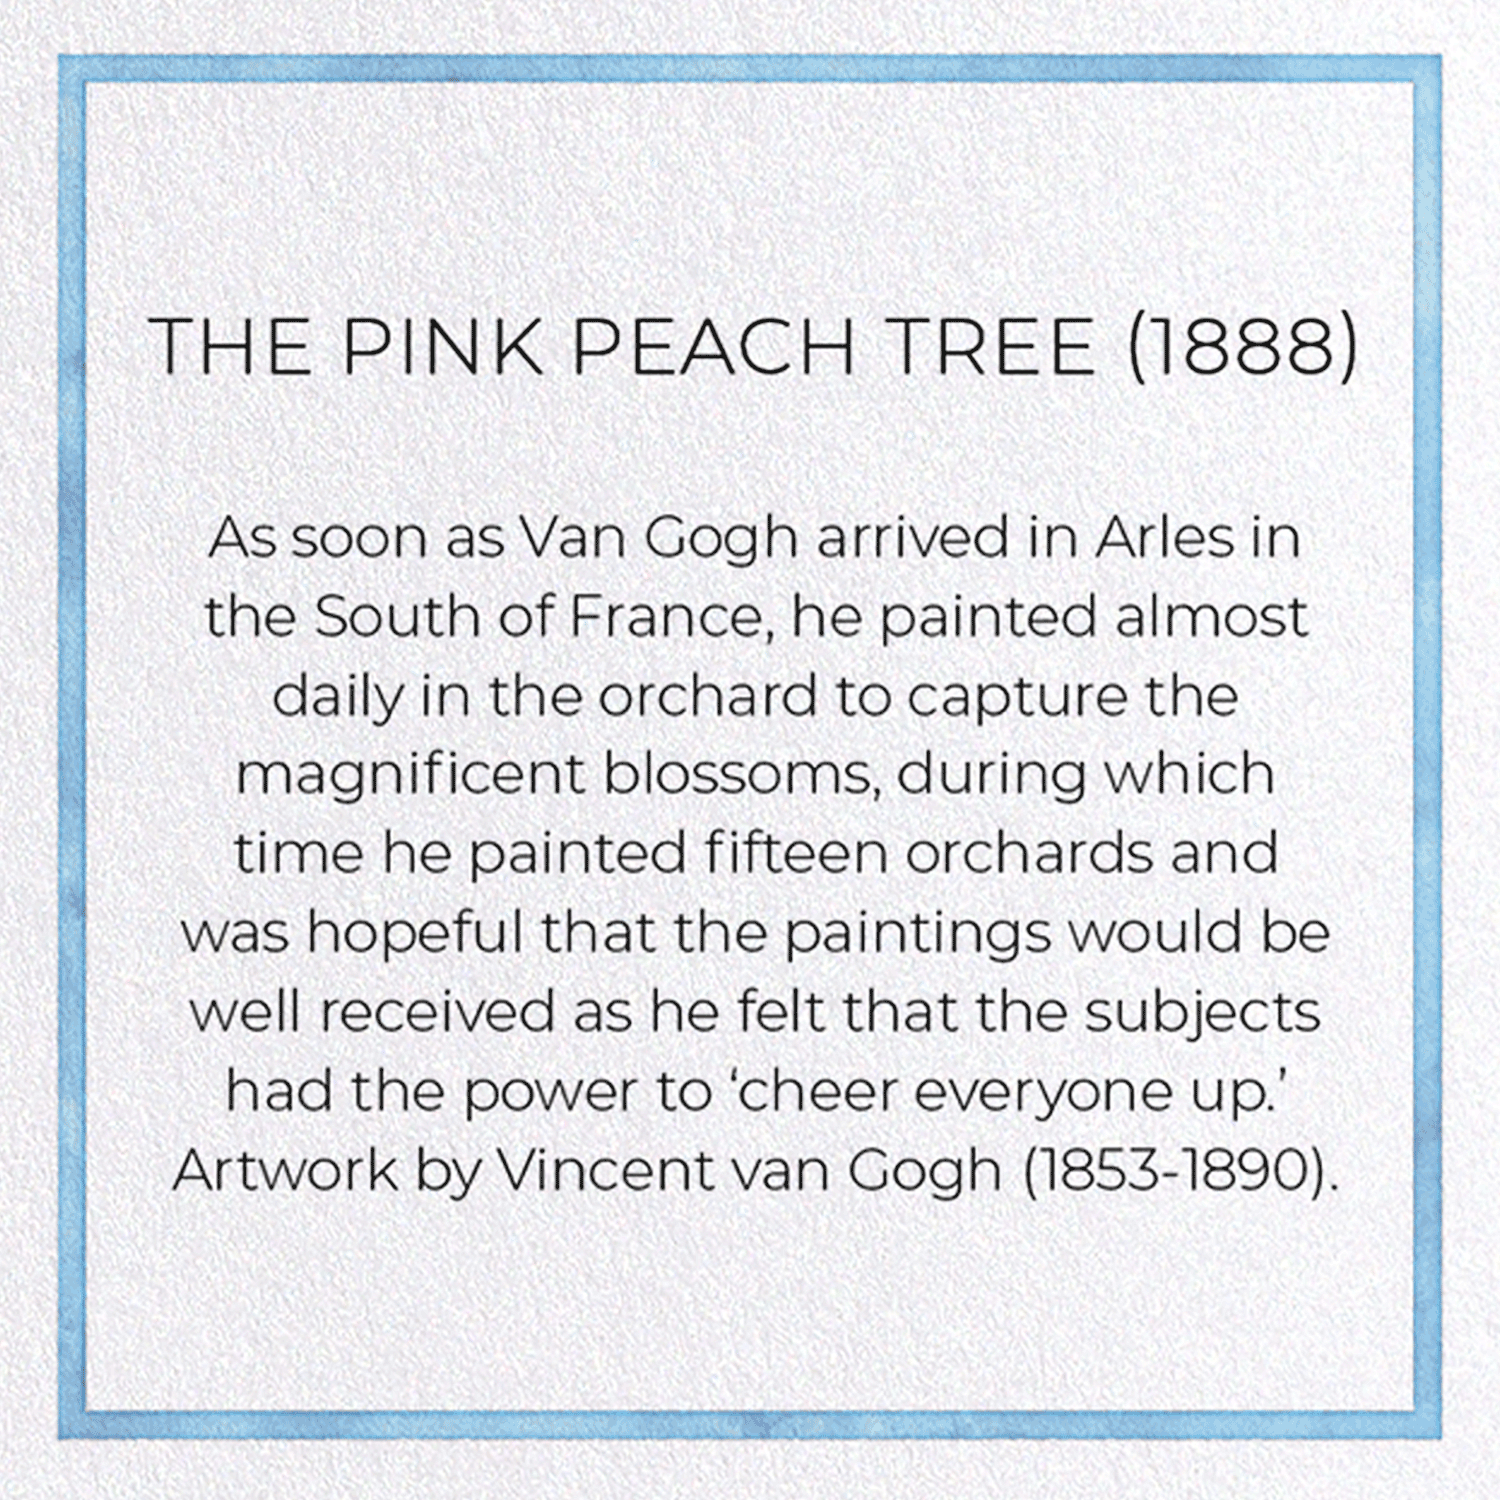 THE PINK PEACH TREE (1888)